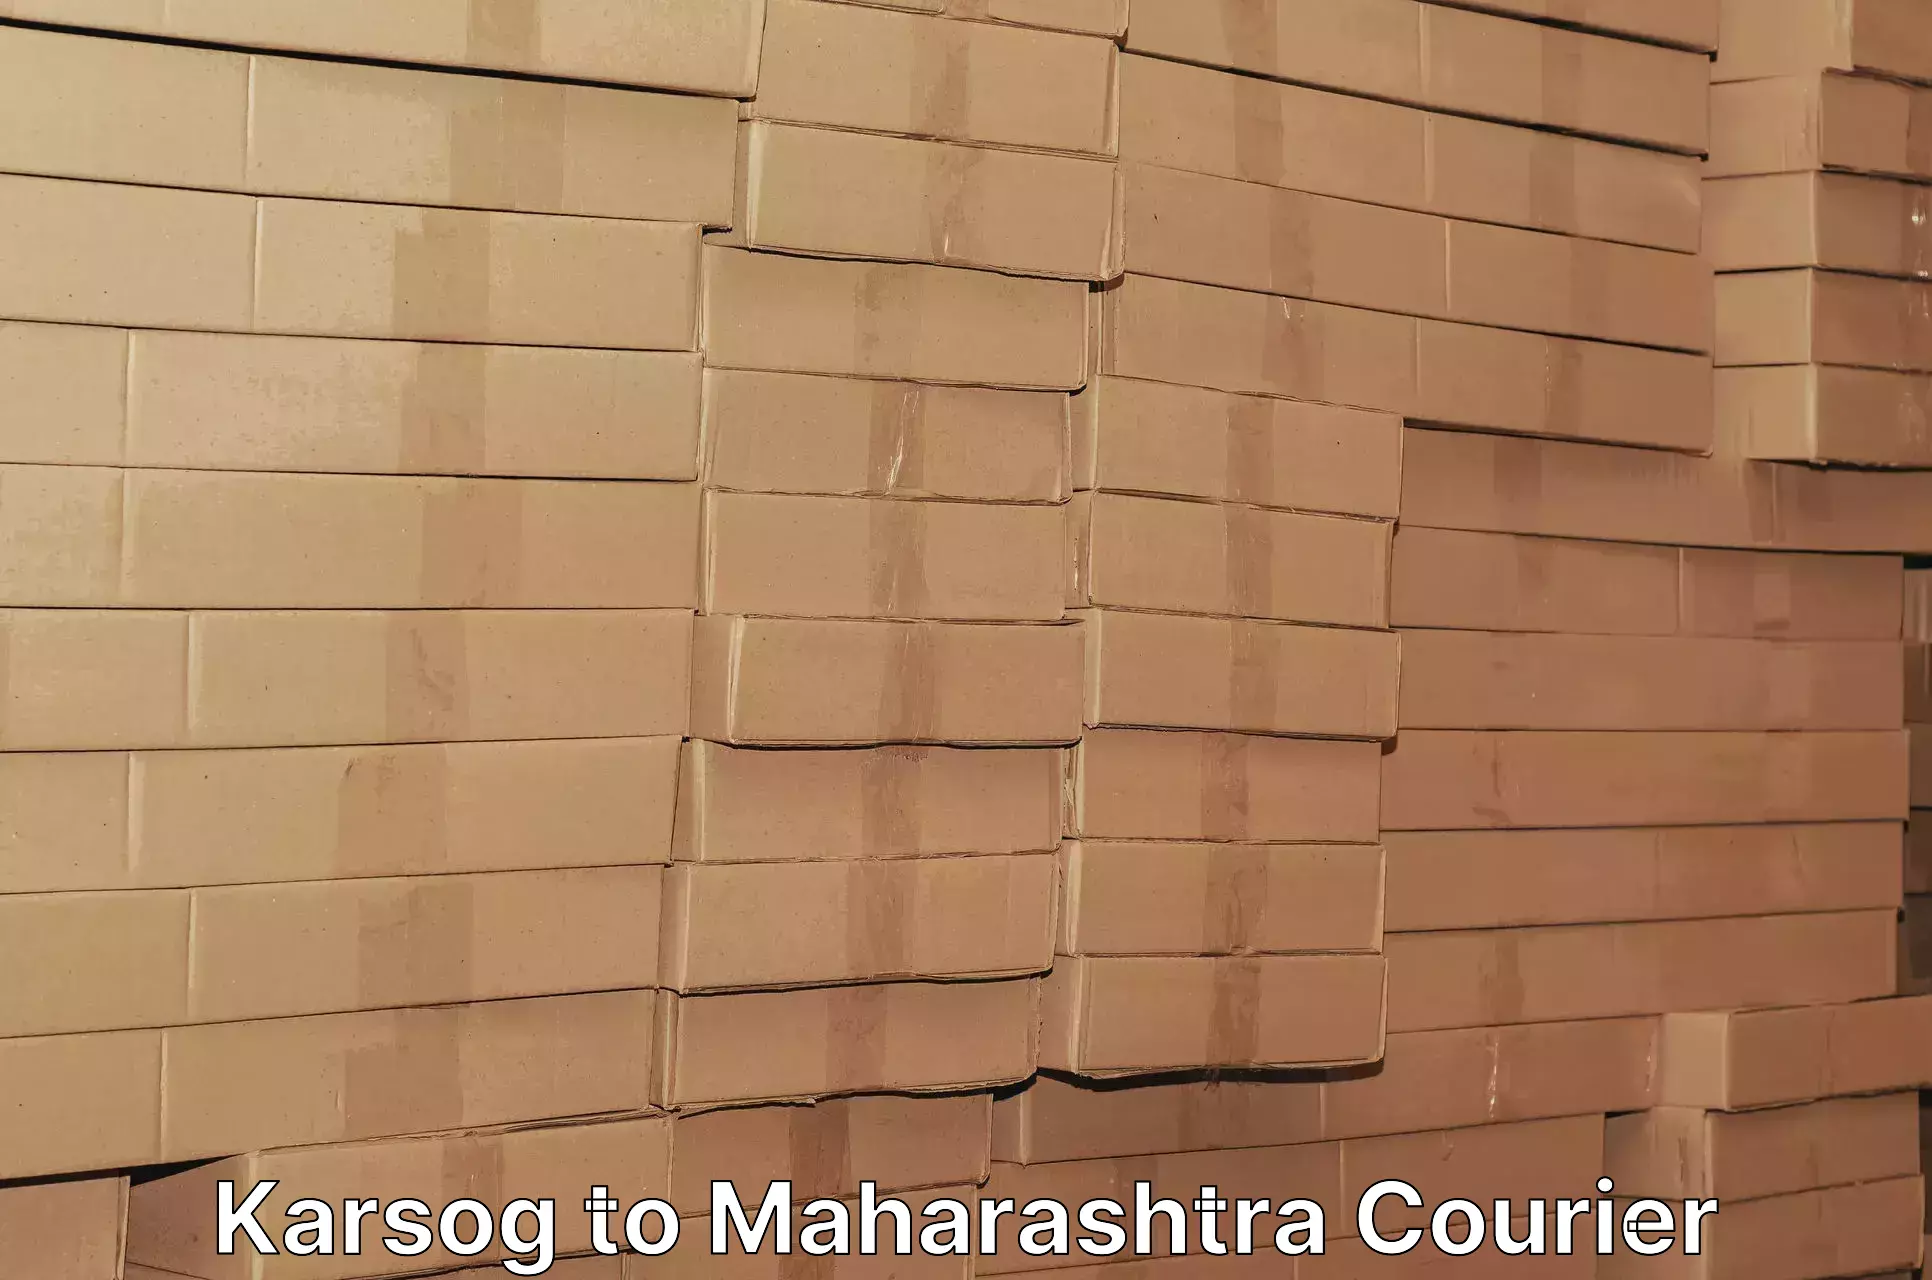 Courier insurance Karsog to Maharashtra